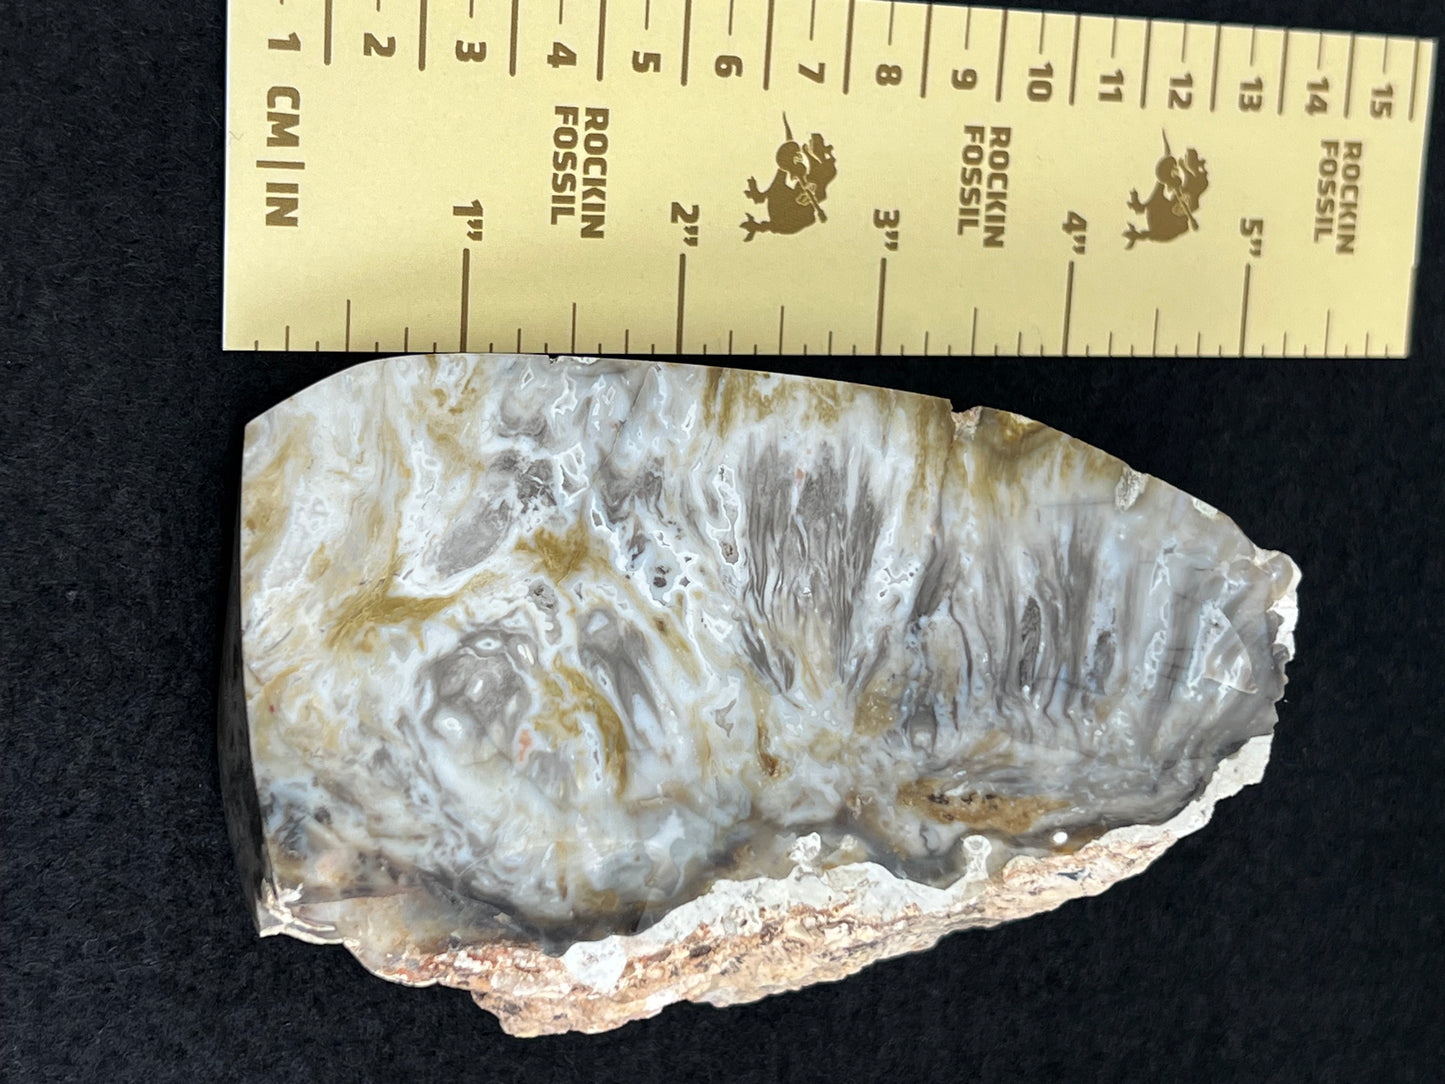 Cycad Cone Piece, Morrison Formation, U.S.A